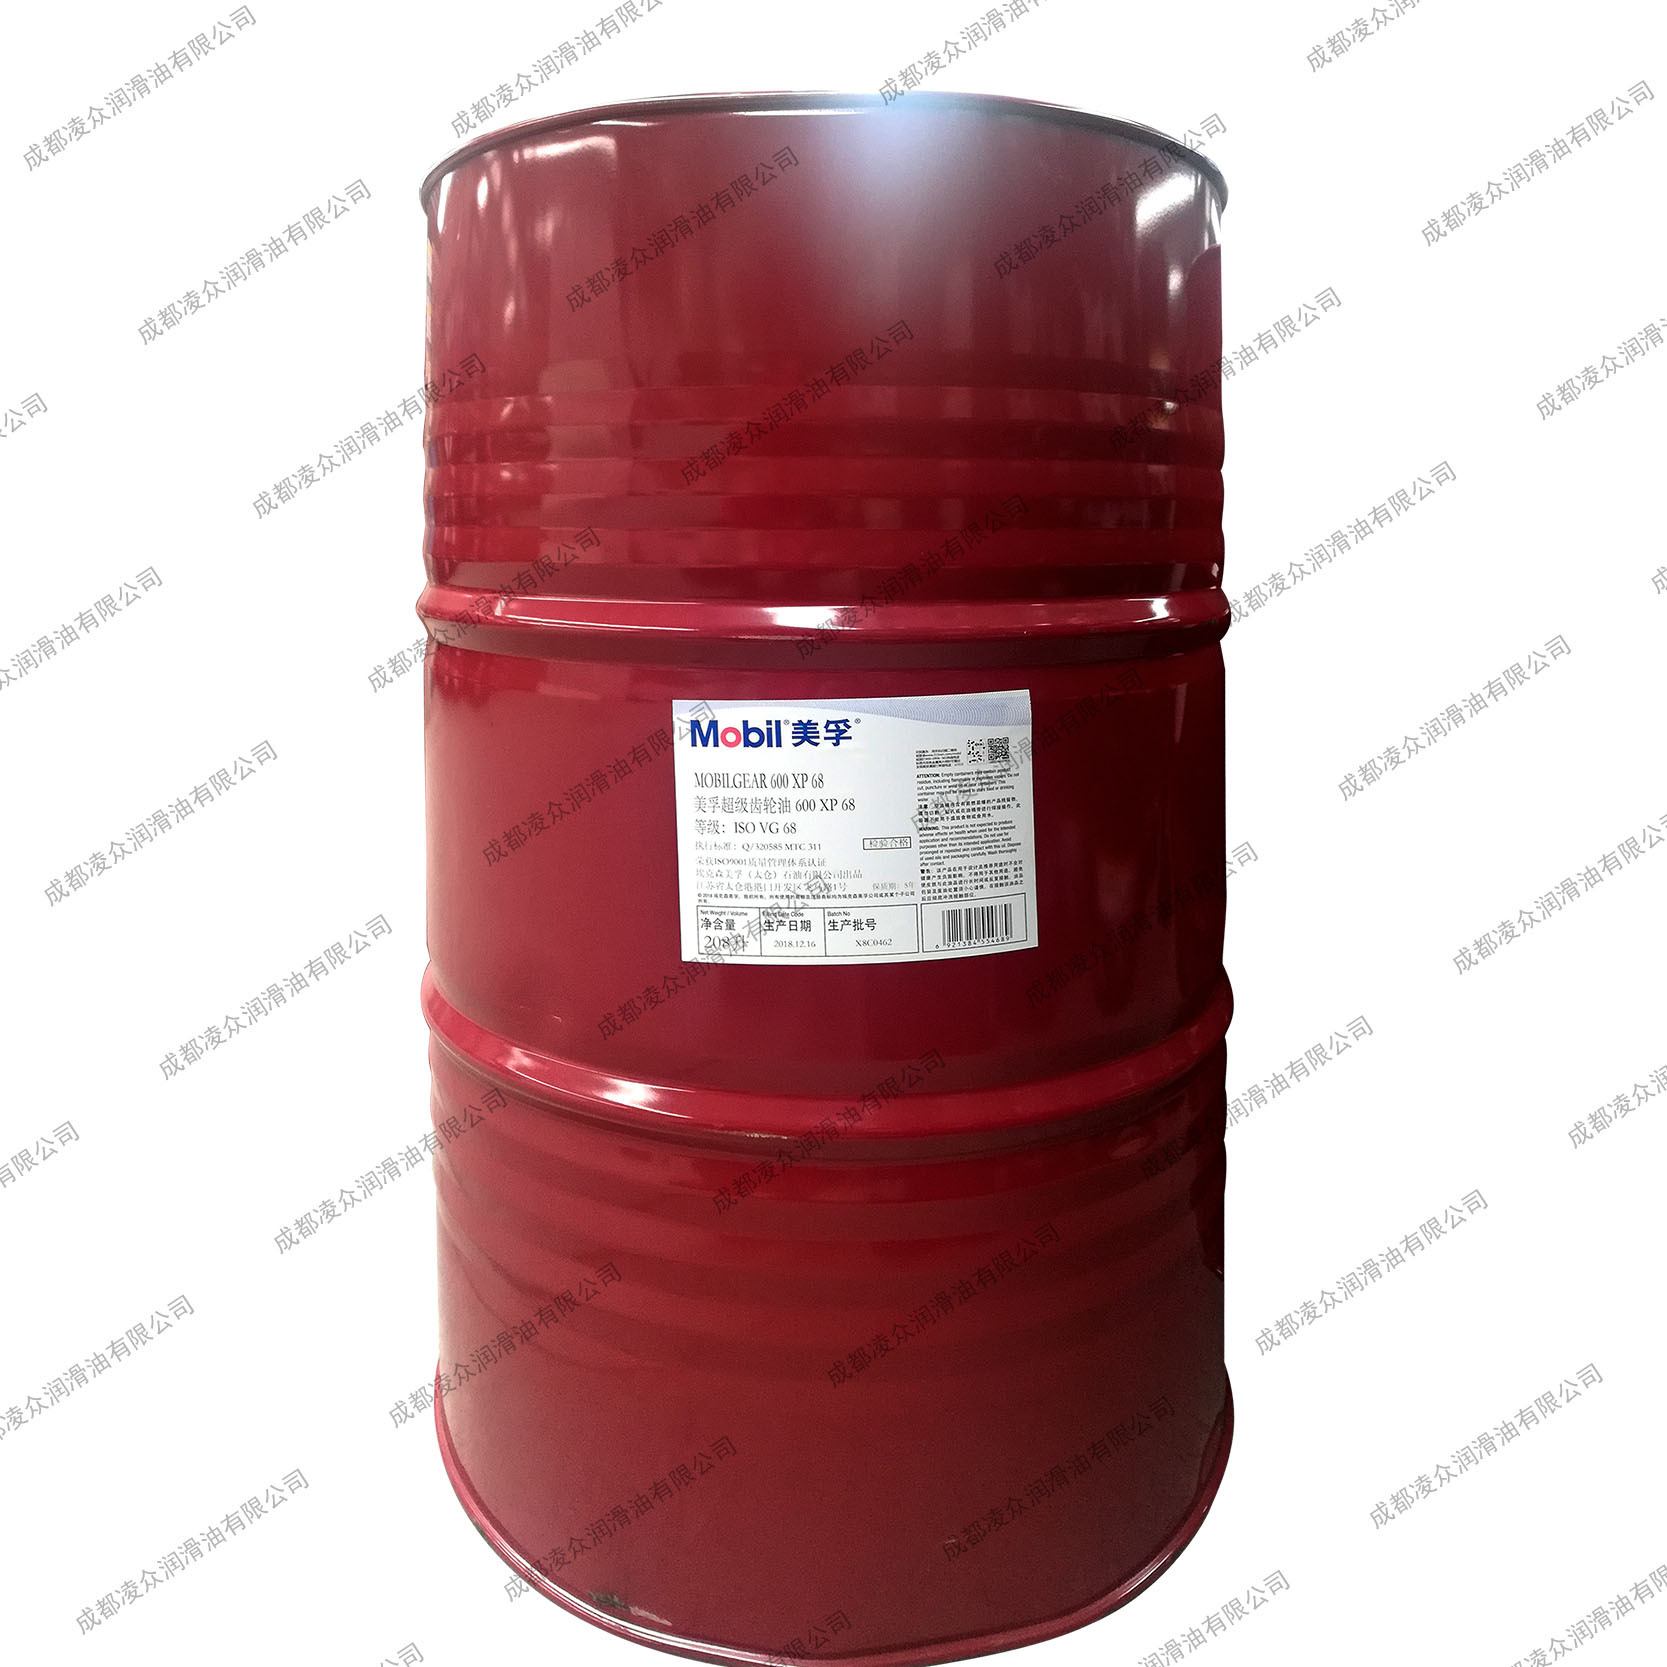 M|OBILGEAR 美|孚600xp68超级齿轮油 ISO VG68工业齿轮油 208L/桶